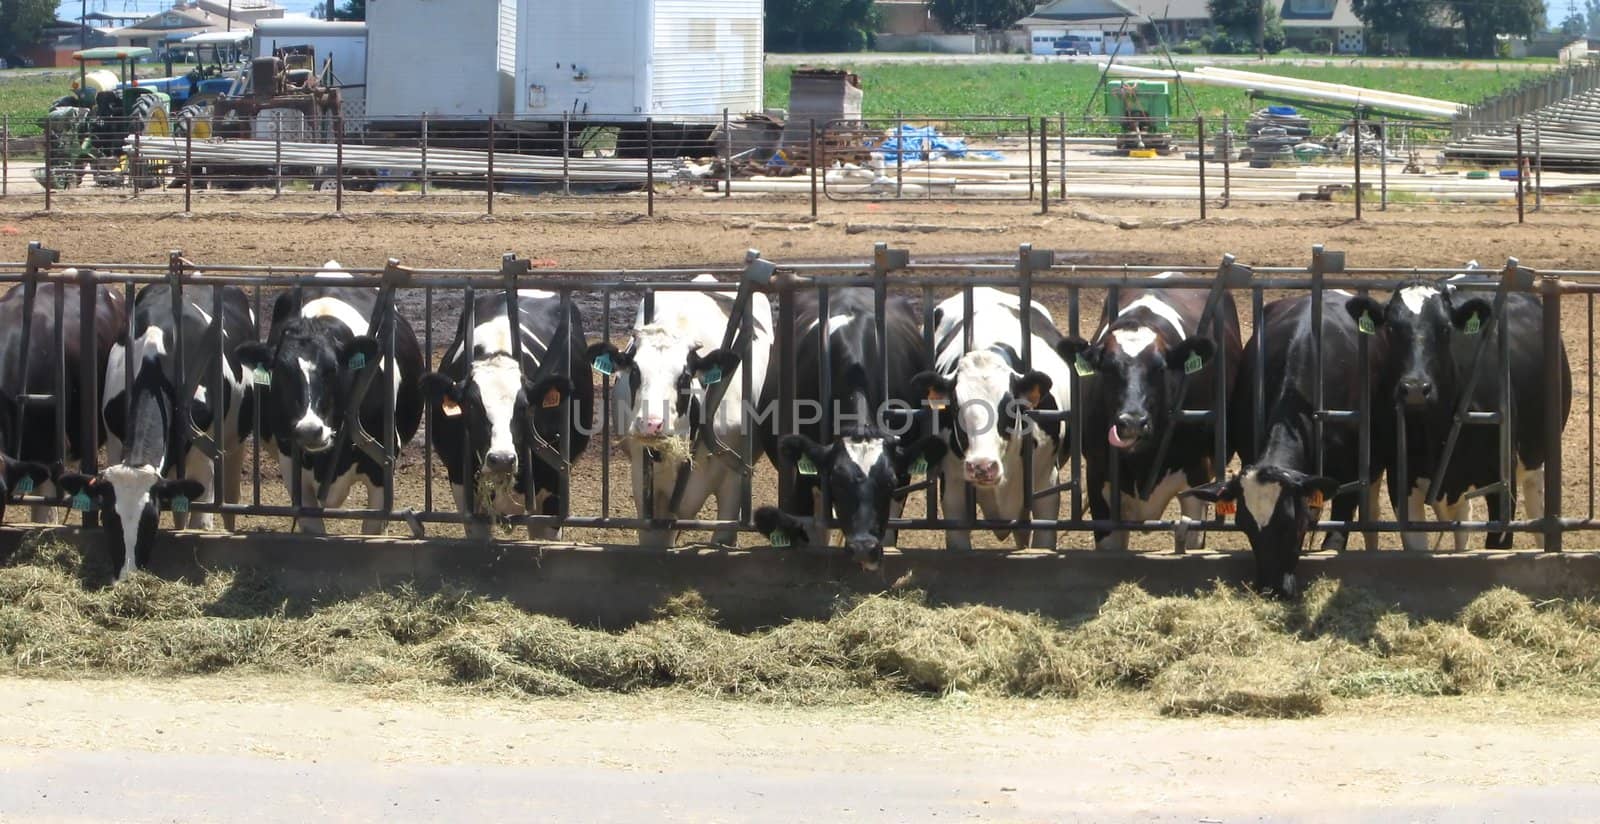 Row of Feeeding Cows by tobkatrina